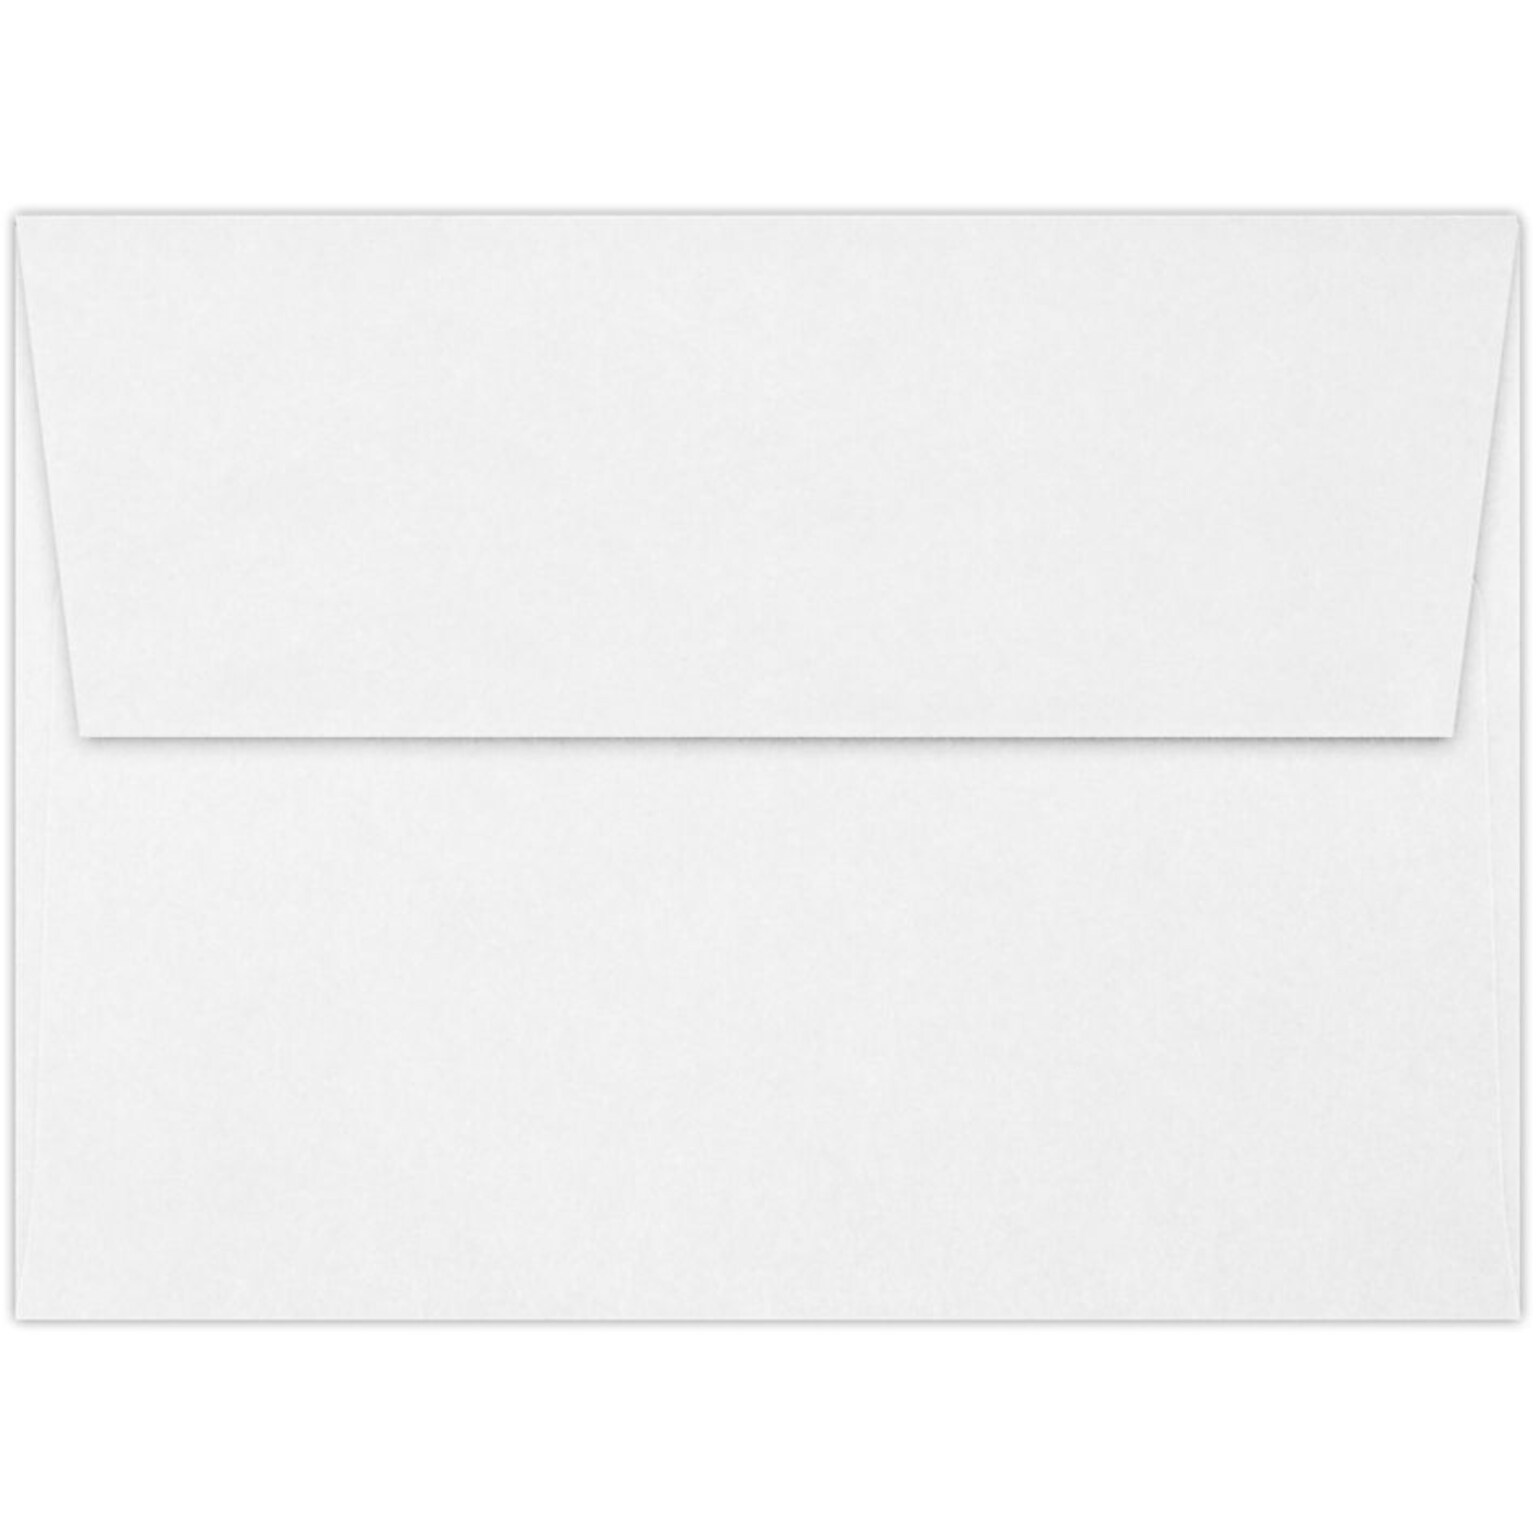 LUX A6 Invitation Envelopes (4 3/4 x 6 1/2) 500/Pack, 70lb. Classic Linen® Solar White (4875-70SWLI-500)